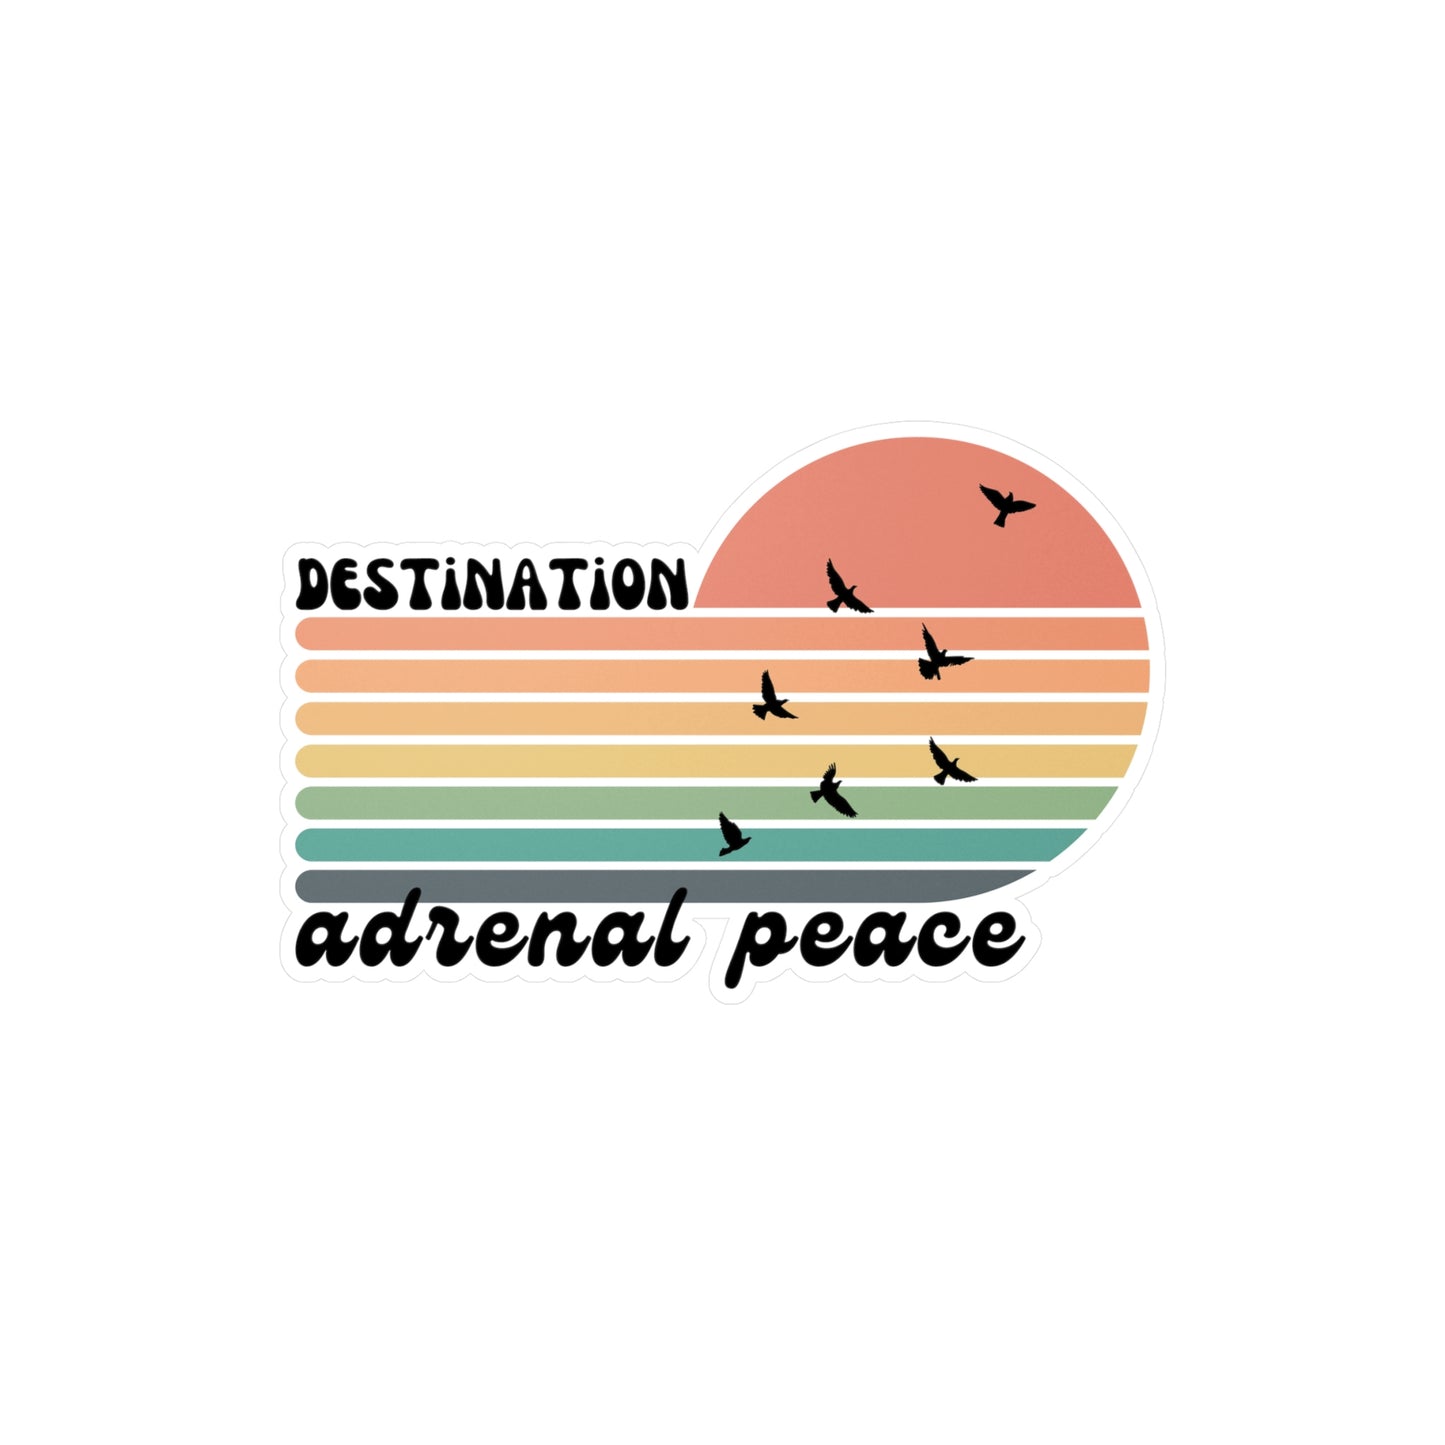 Destination: Adrenal Peace (retro rainbow) Kiss-Cut Vinyl Decals